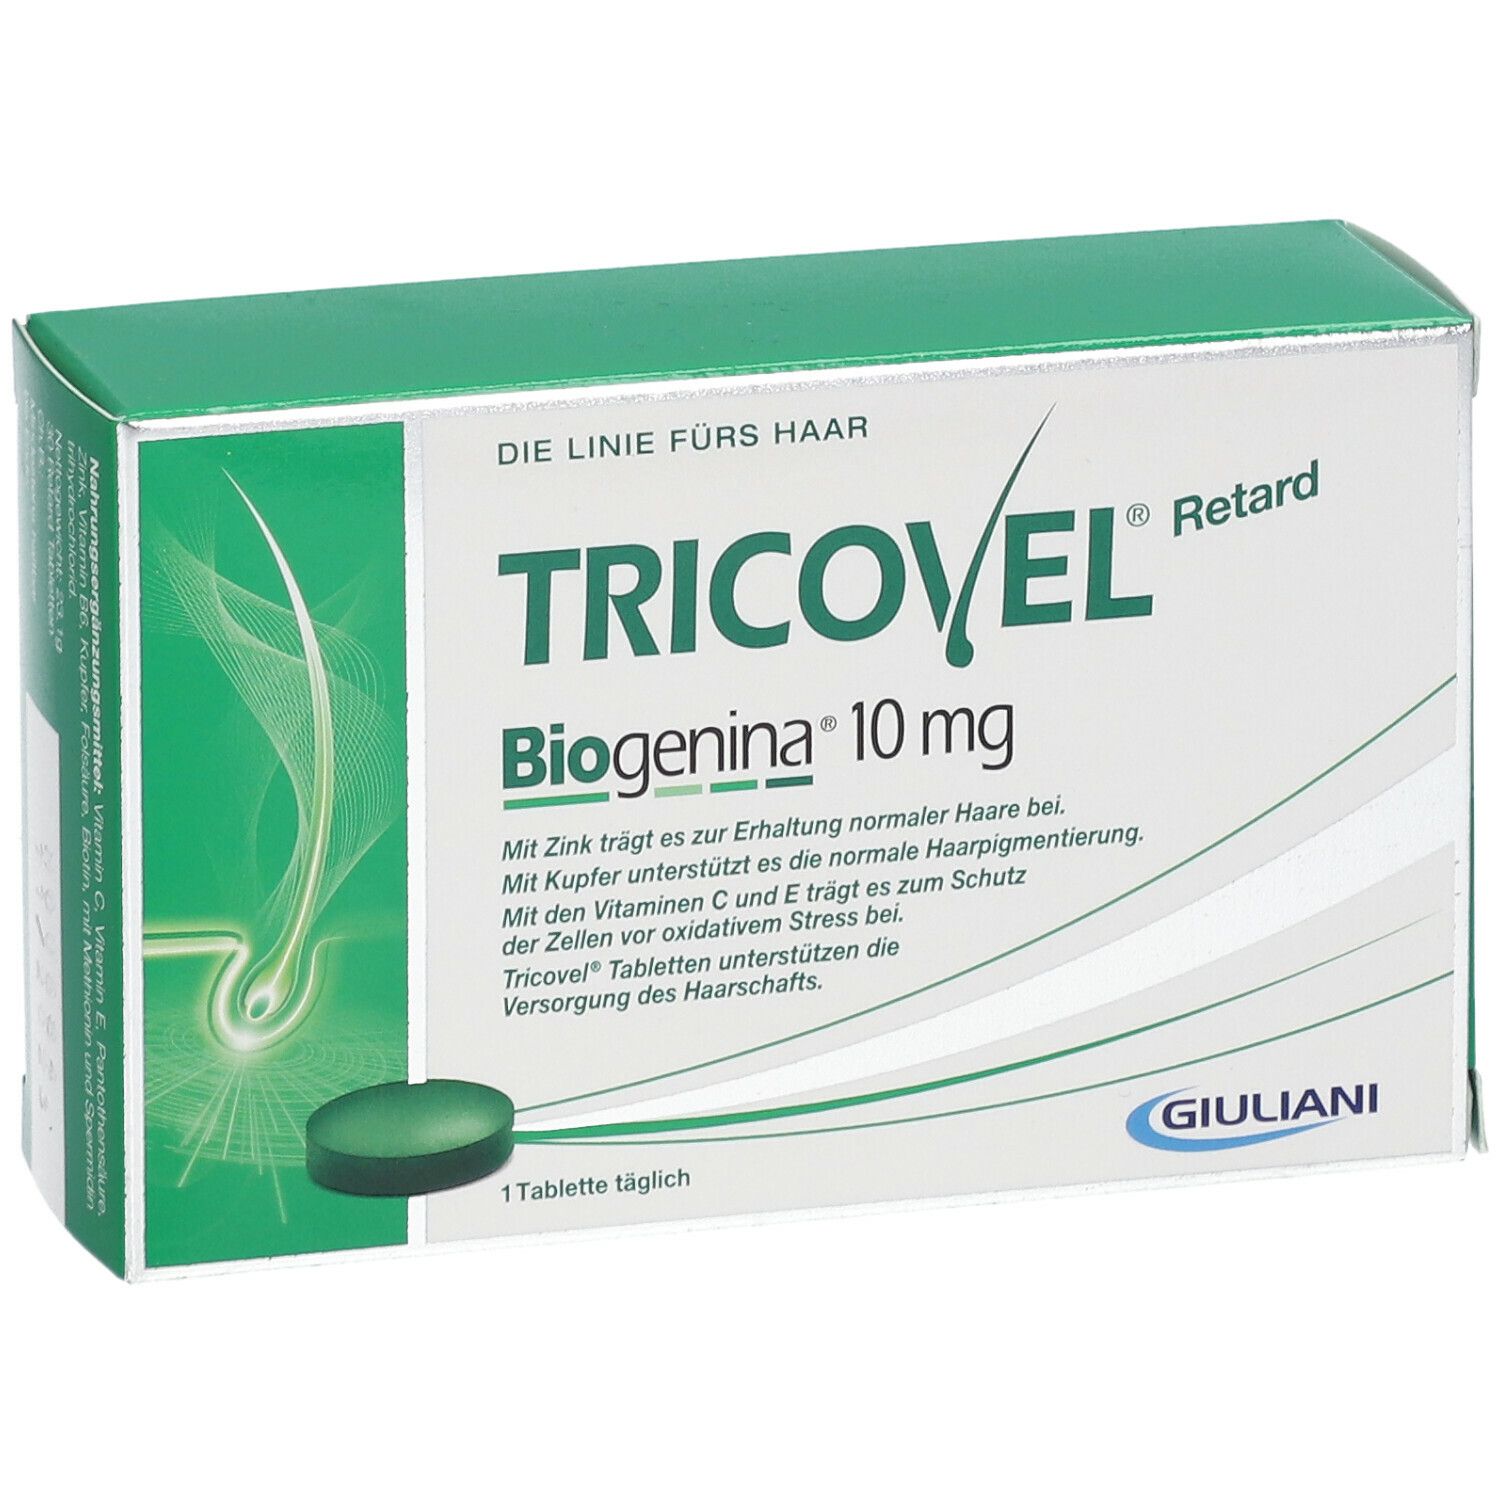 TRICOVEL® Biogenina® 10 mg